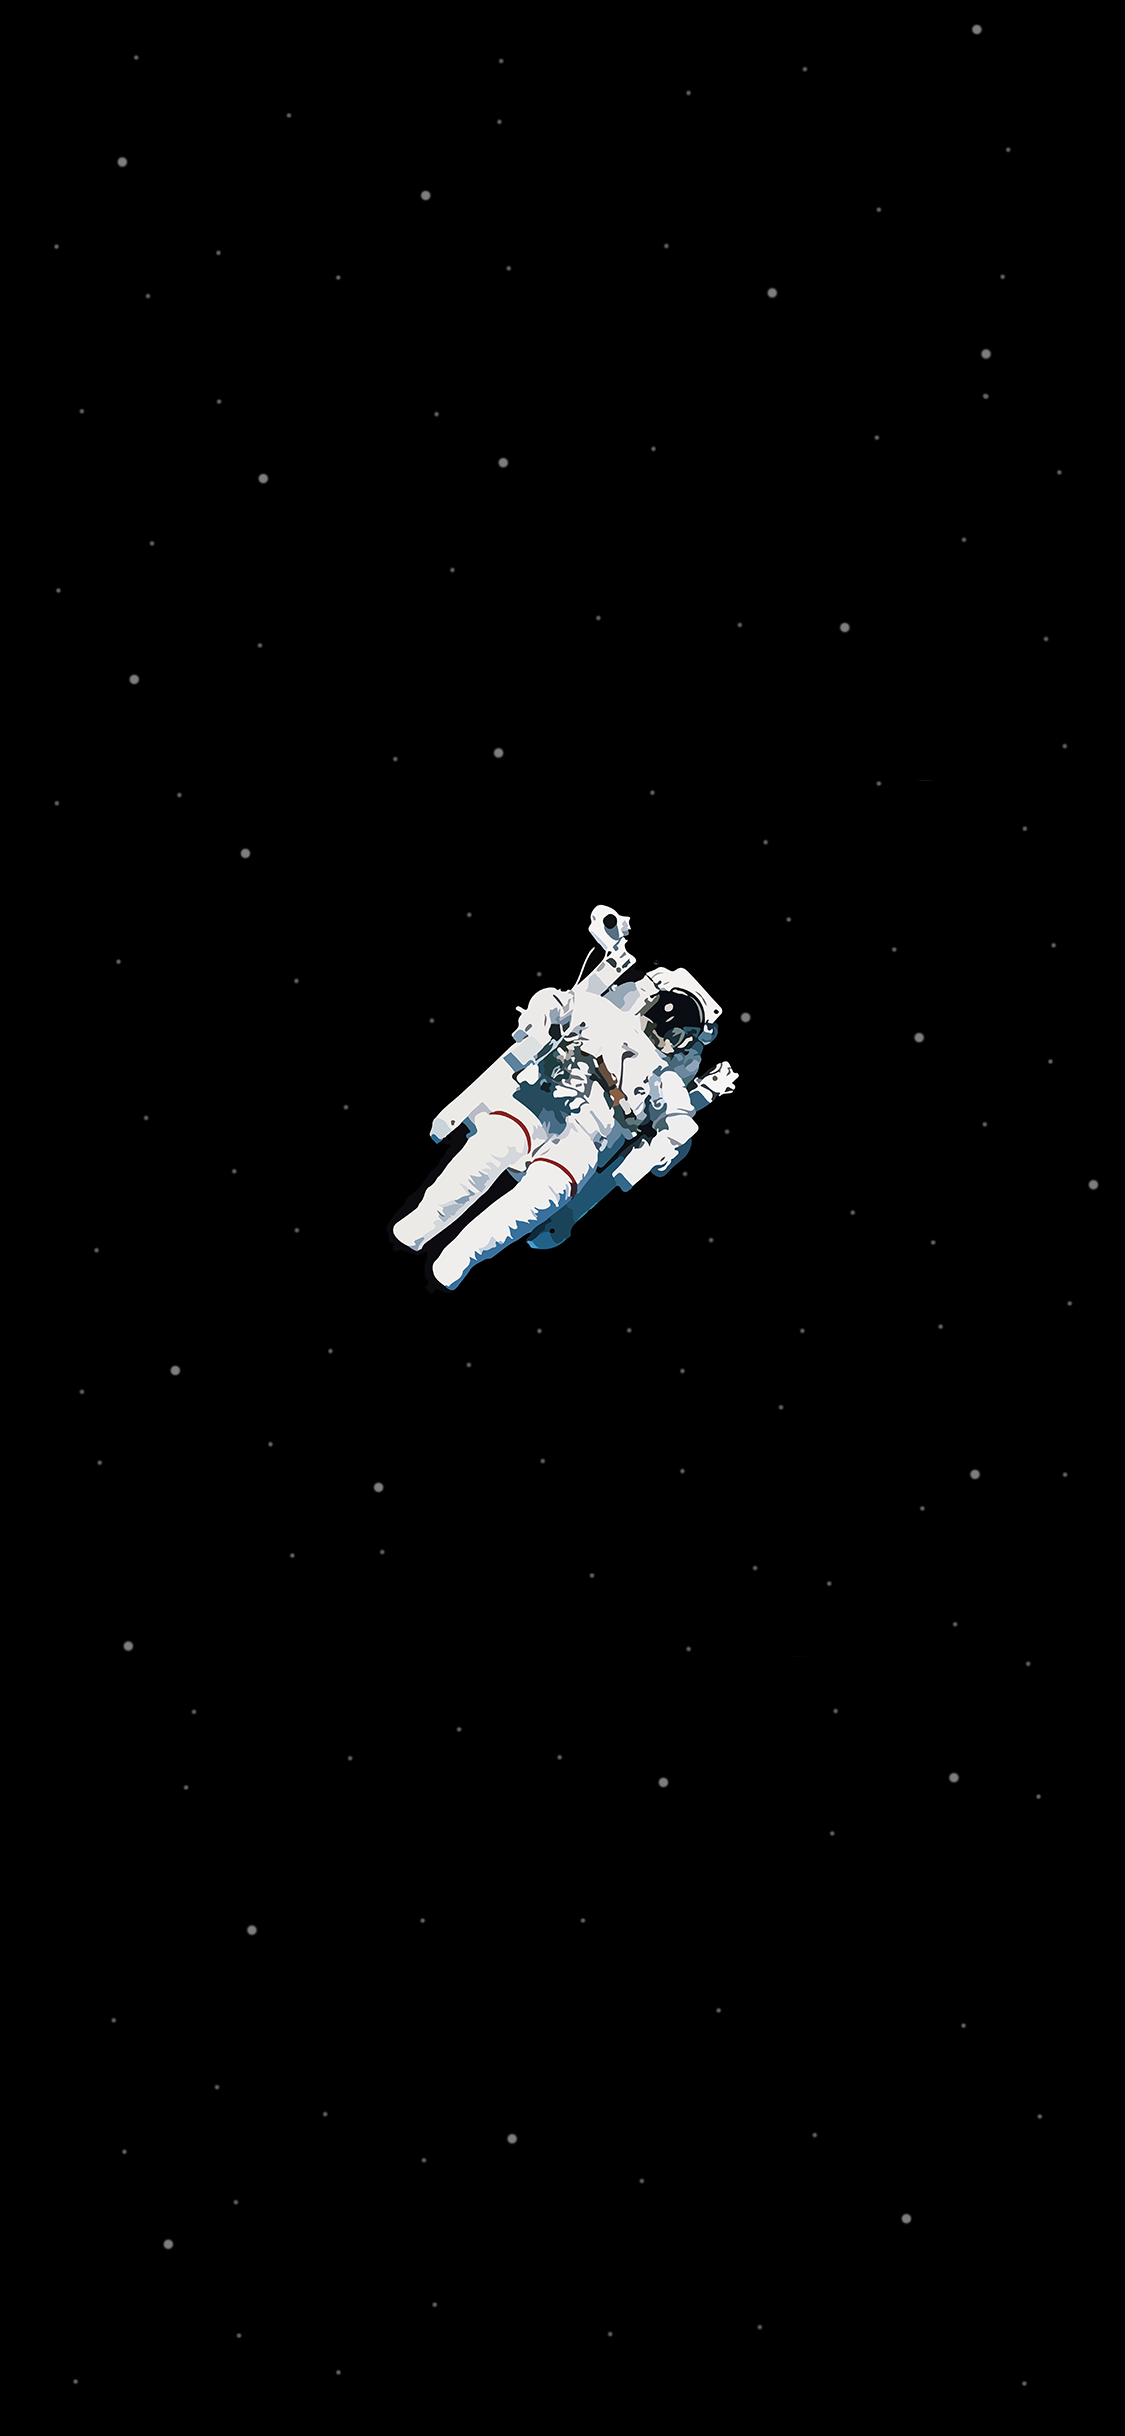 Wallpaper ID: 378360 / Sci Fi Astronaut Phone Wallpaper, , 1080x2160 free  download